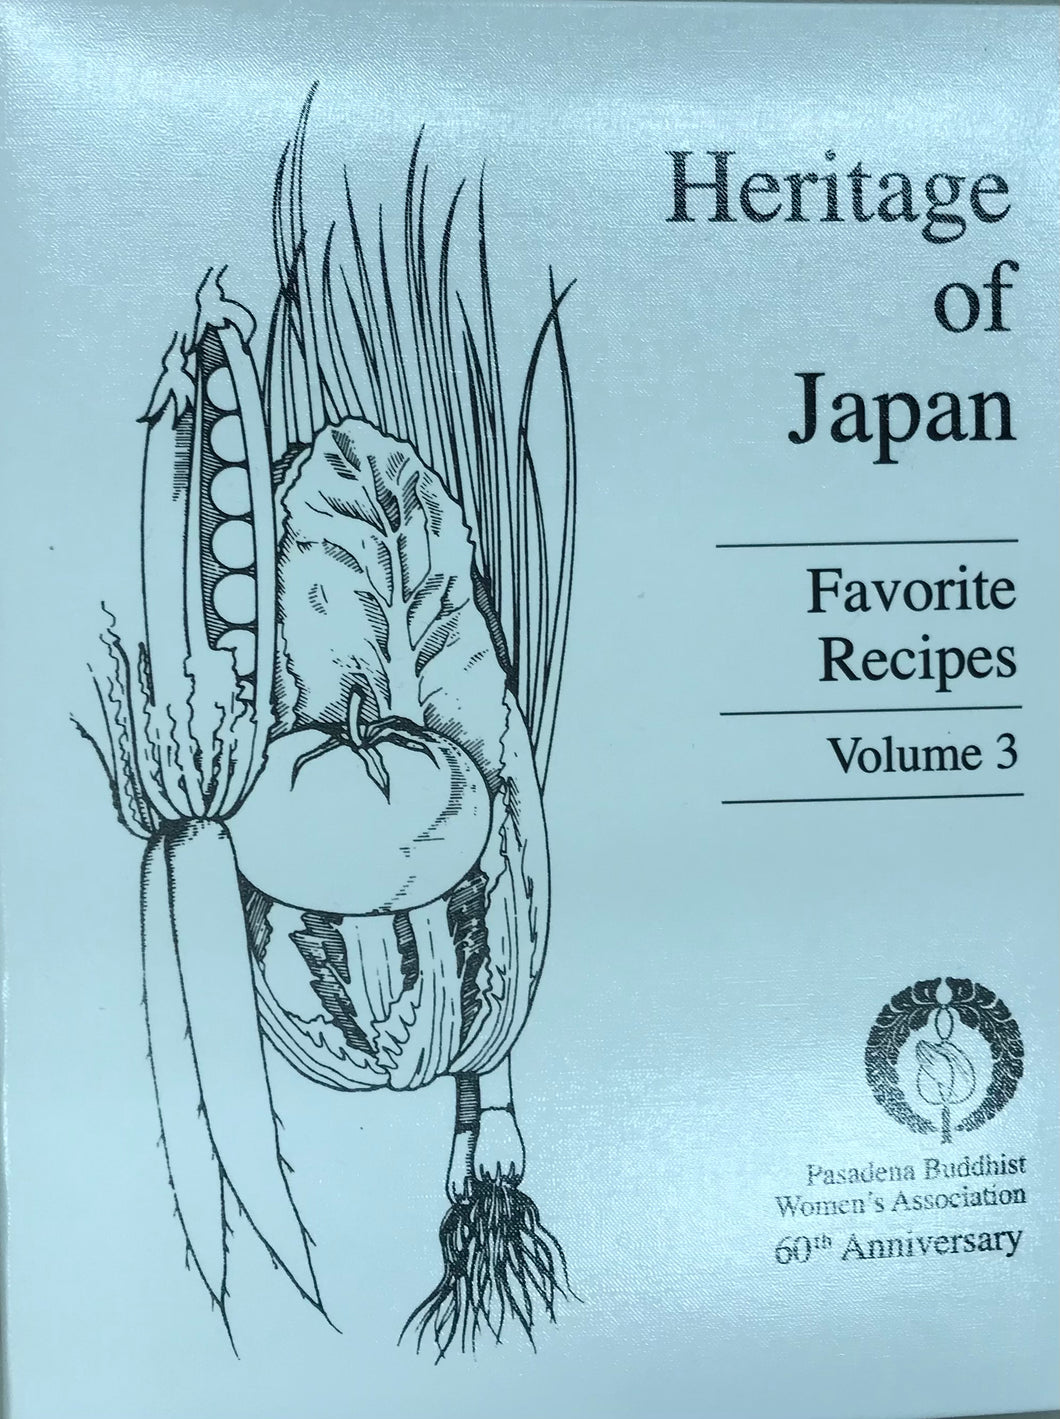 Heritage of Japan Cookbook